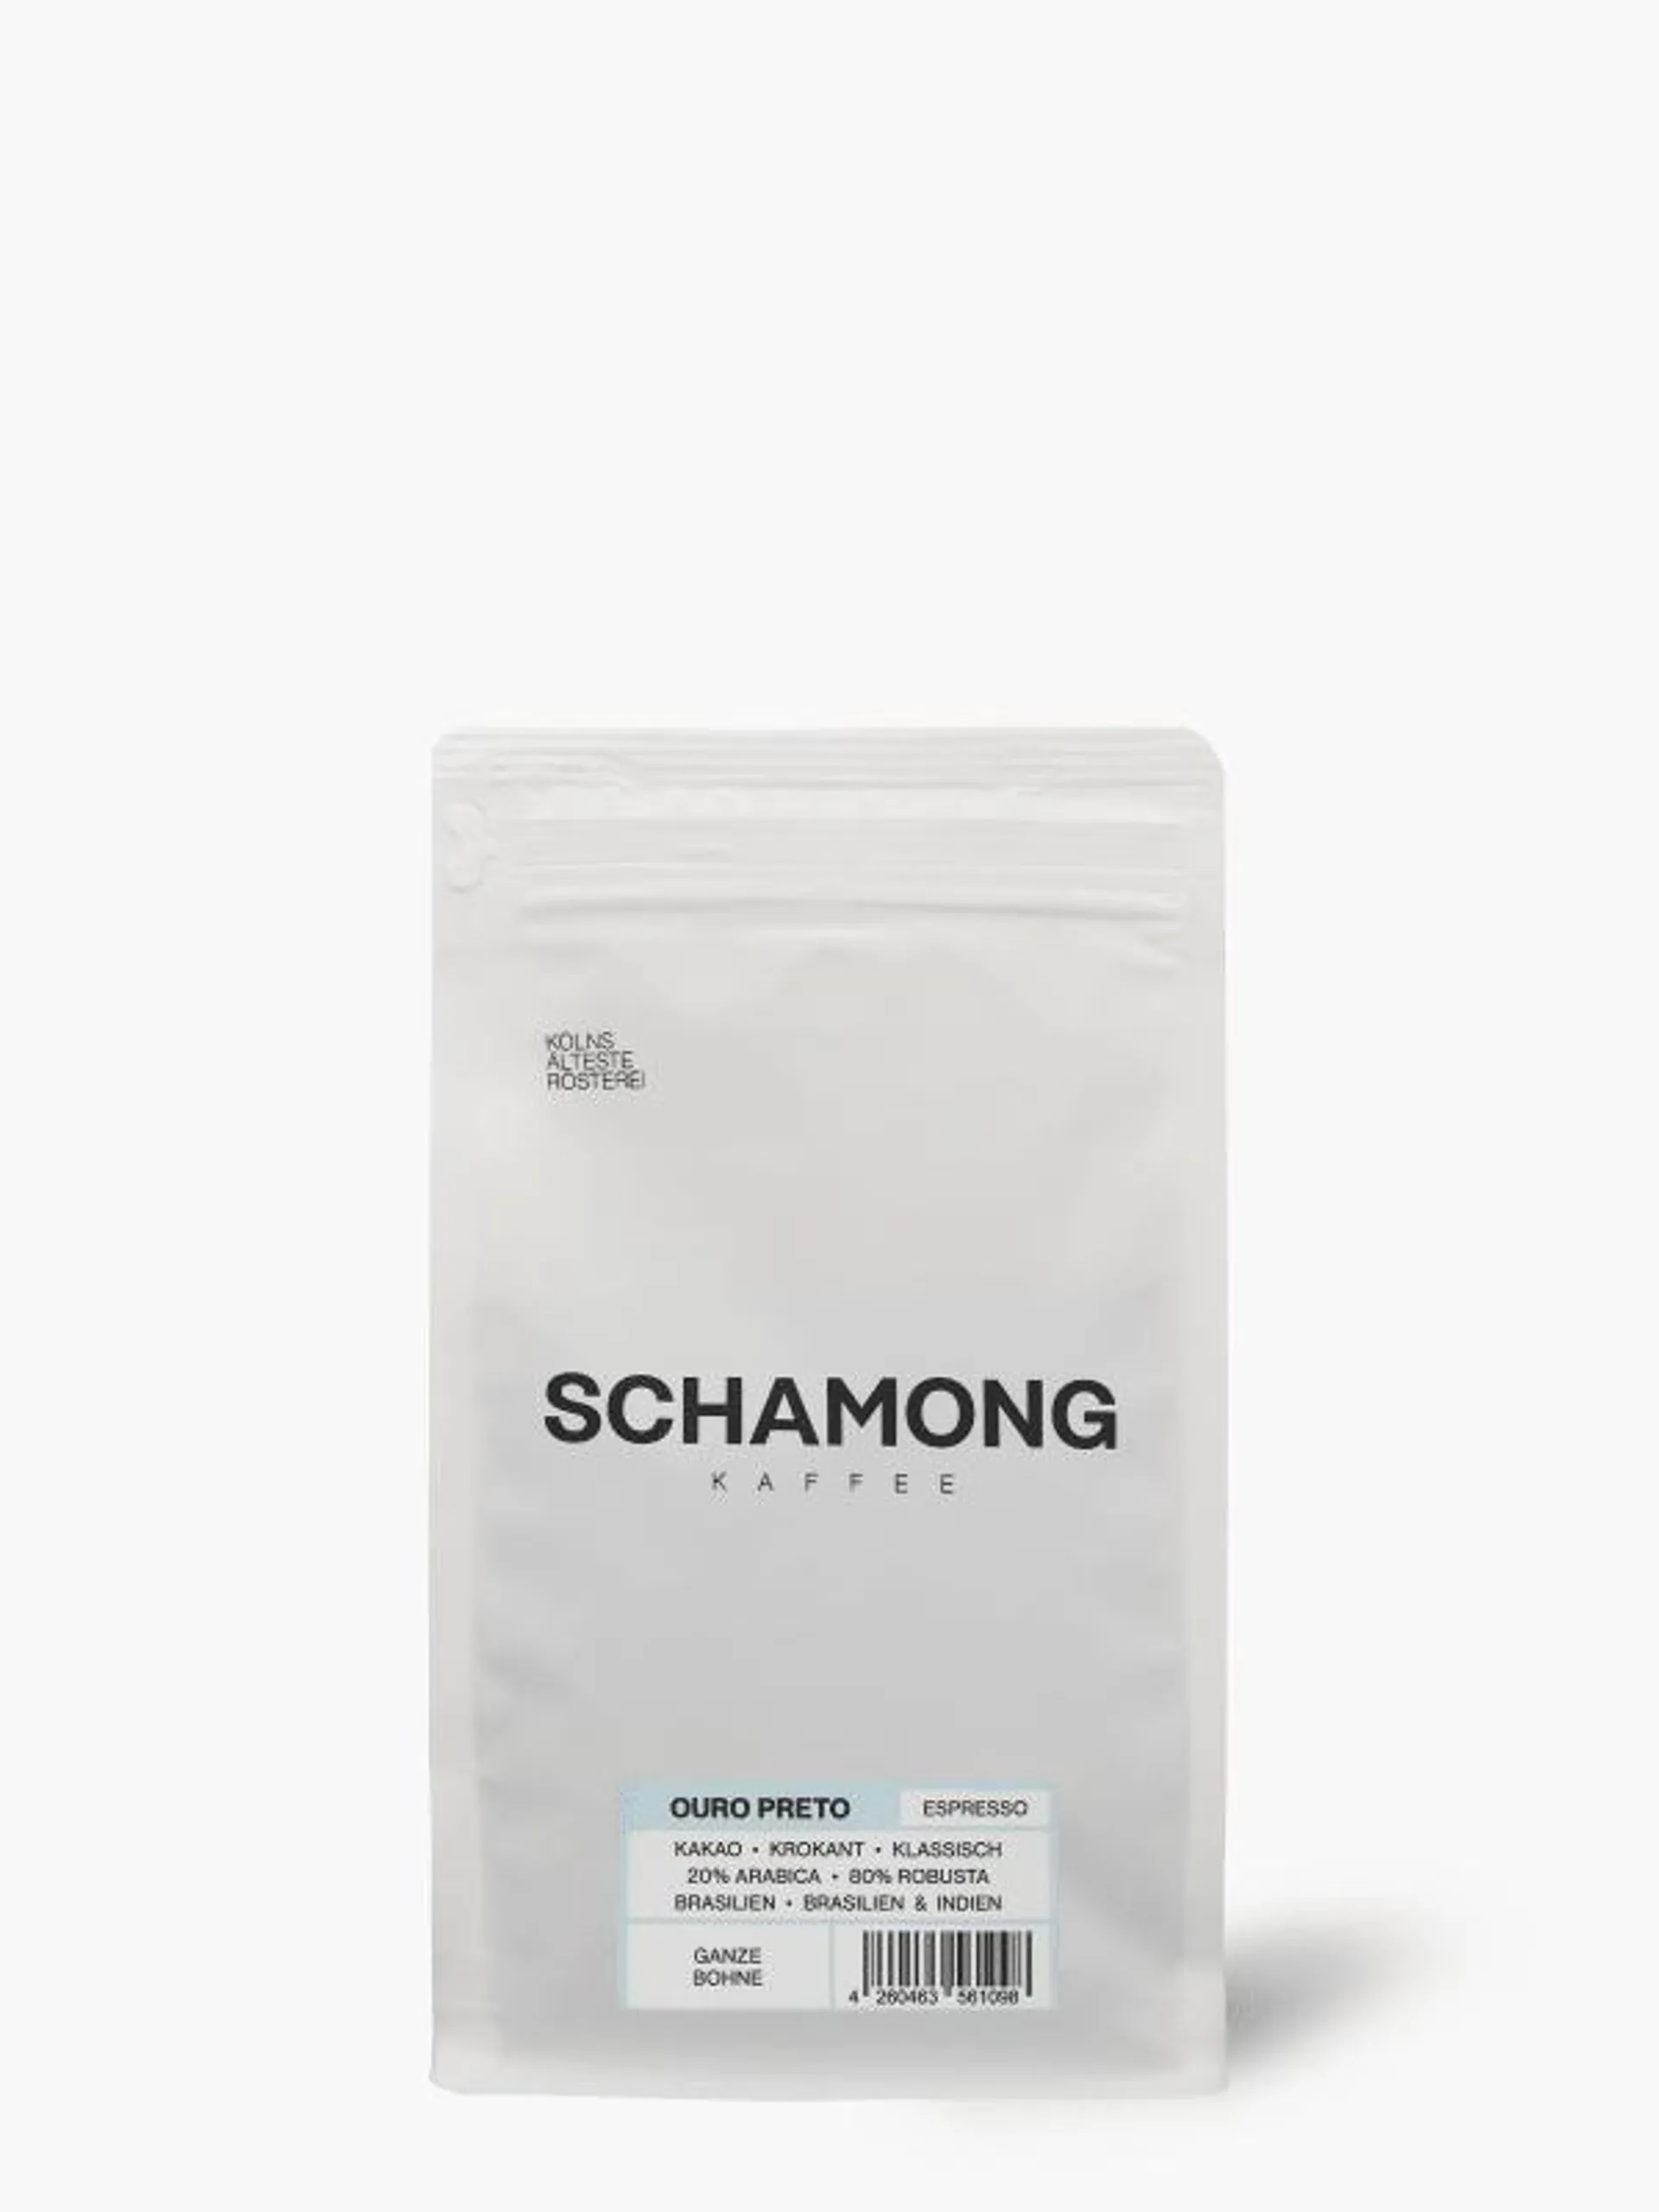 Schamong Espresso Ouro Preto ganze Bohnen 250g